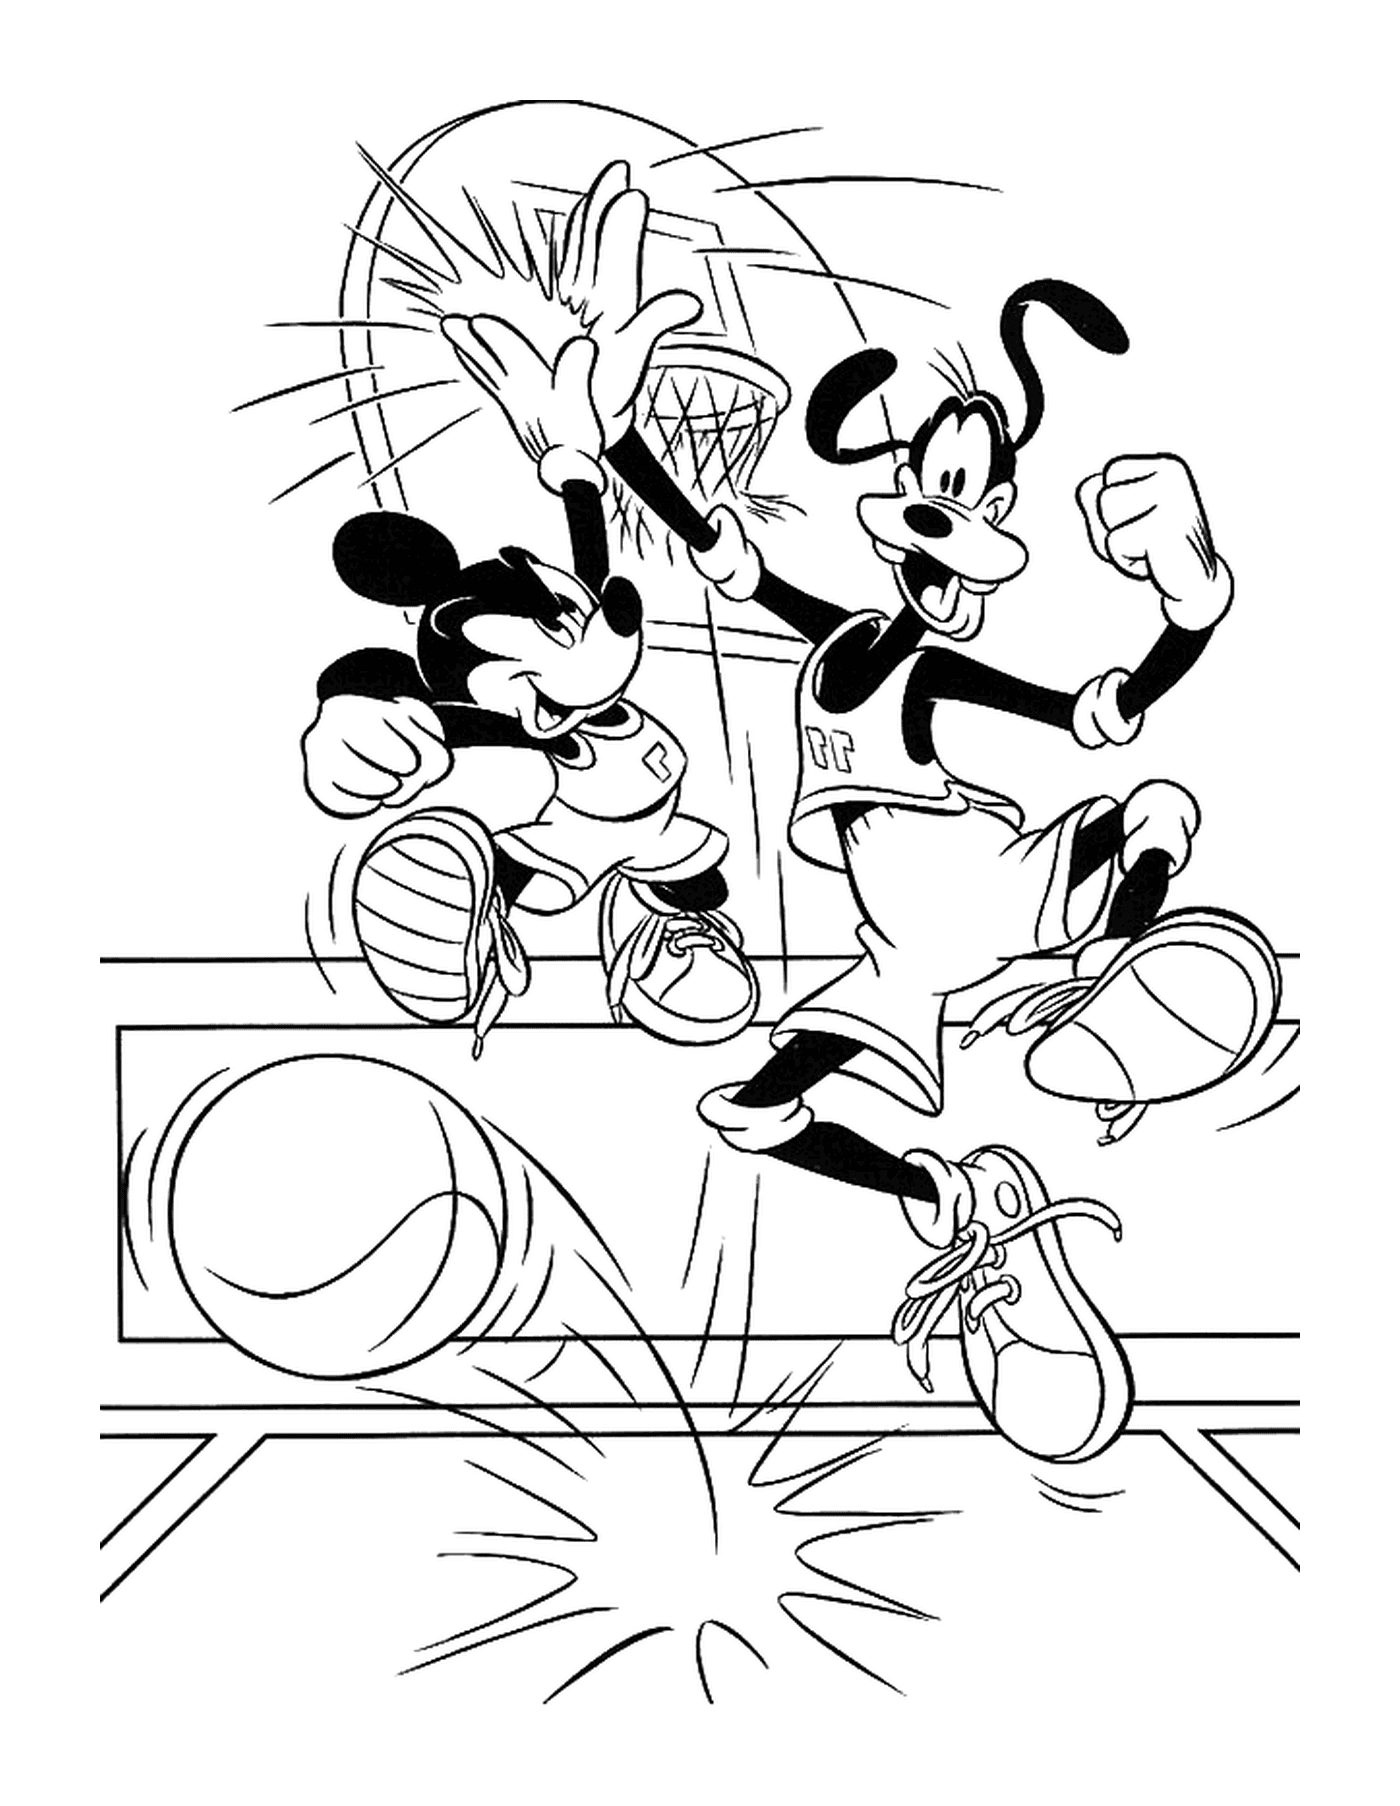   Dingo et Mickey jouent au basketball 